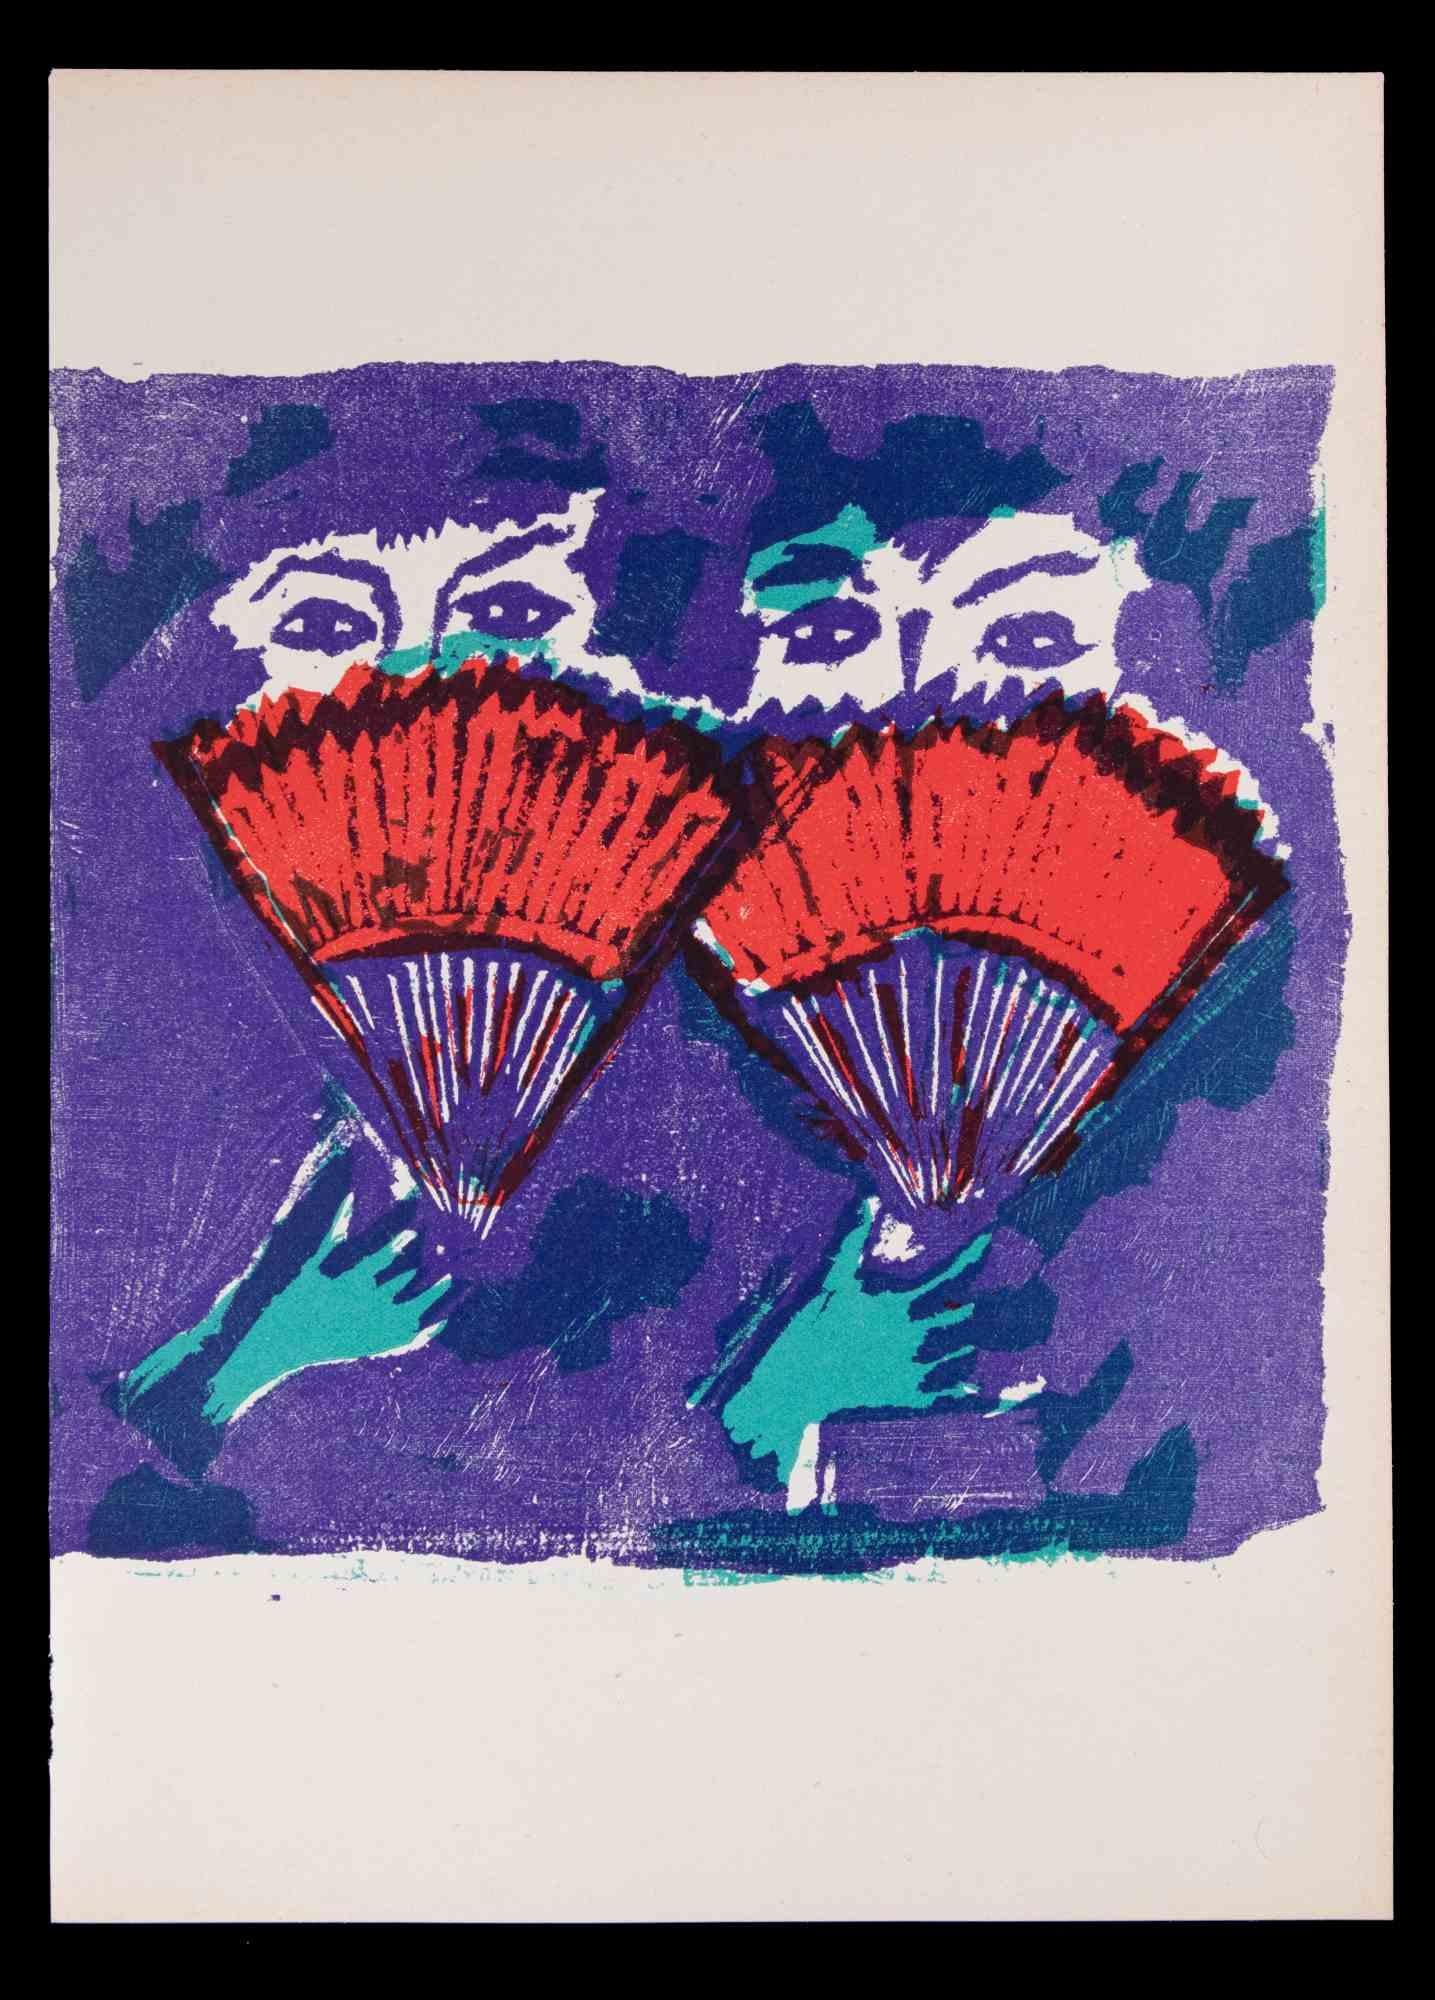 Hand Fans - Linocut by Mino Maccari - 1951